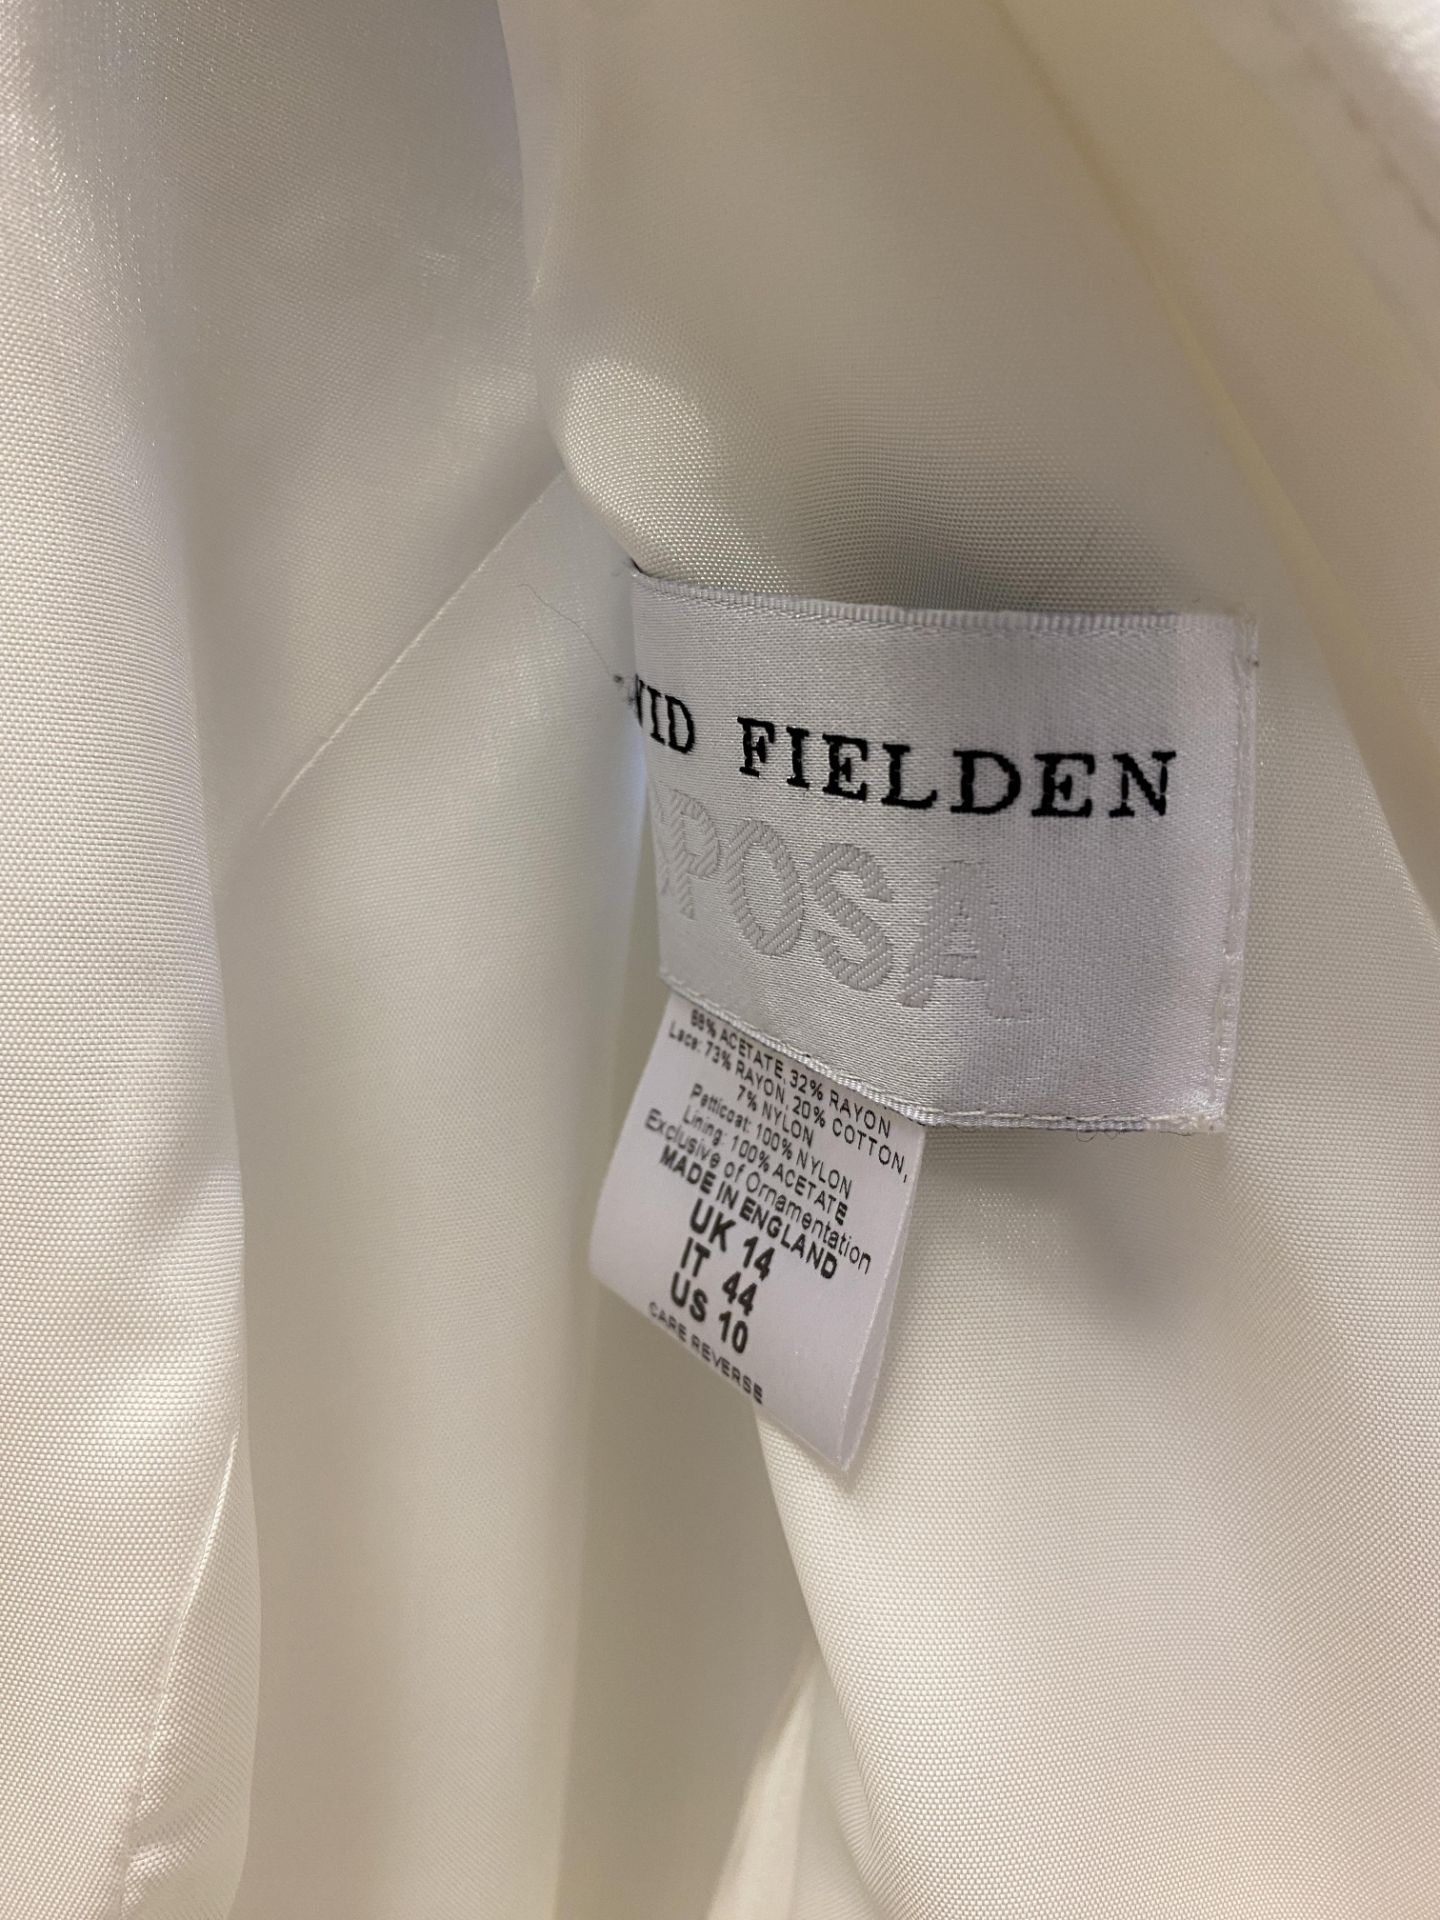 1 x DAVID FIELDEN '8816' Jewel Neck Full Skirted Designer Wedding Dress RRP £2,850 UK 12 - Image 8 of 9